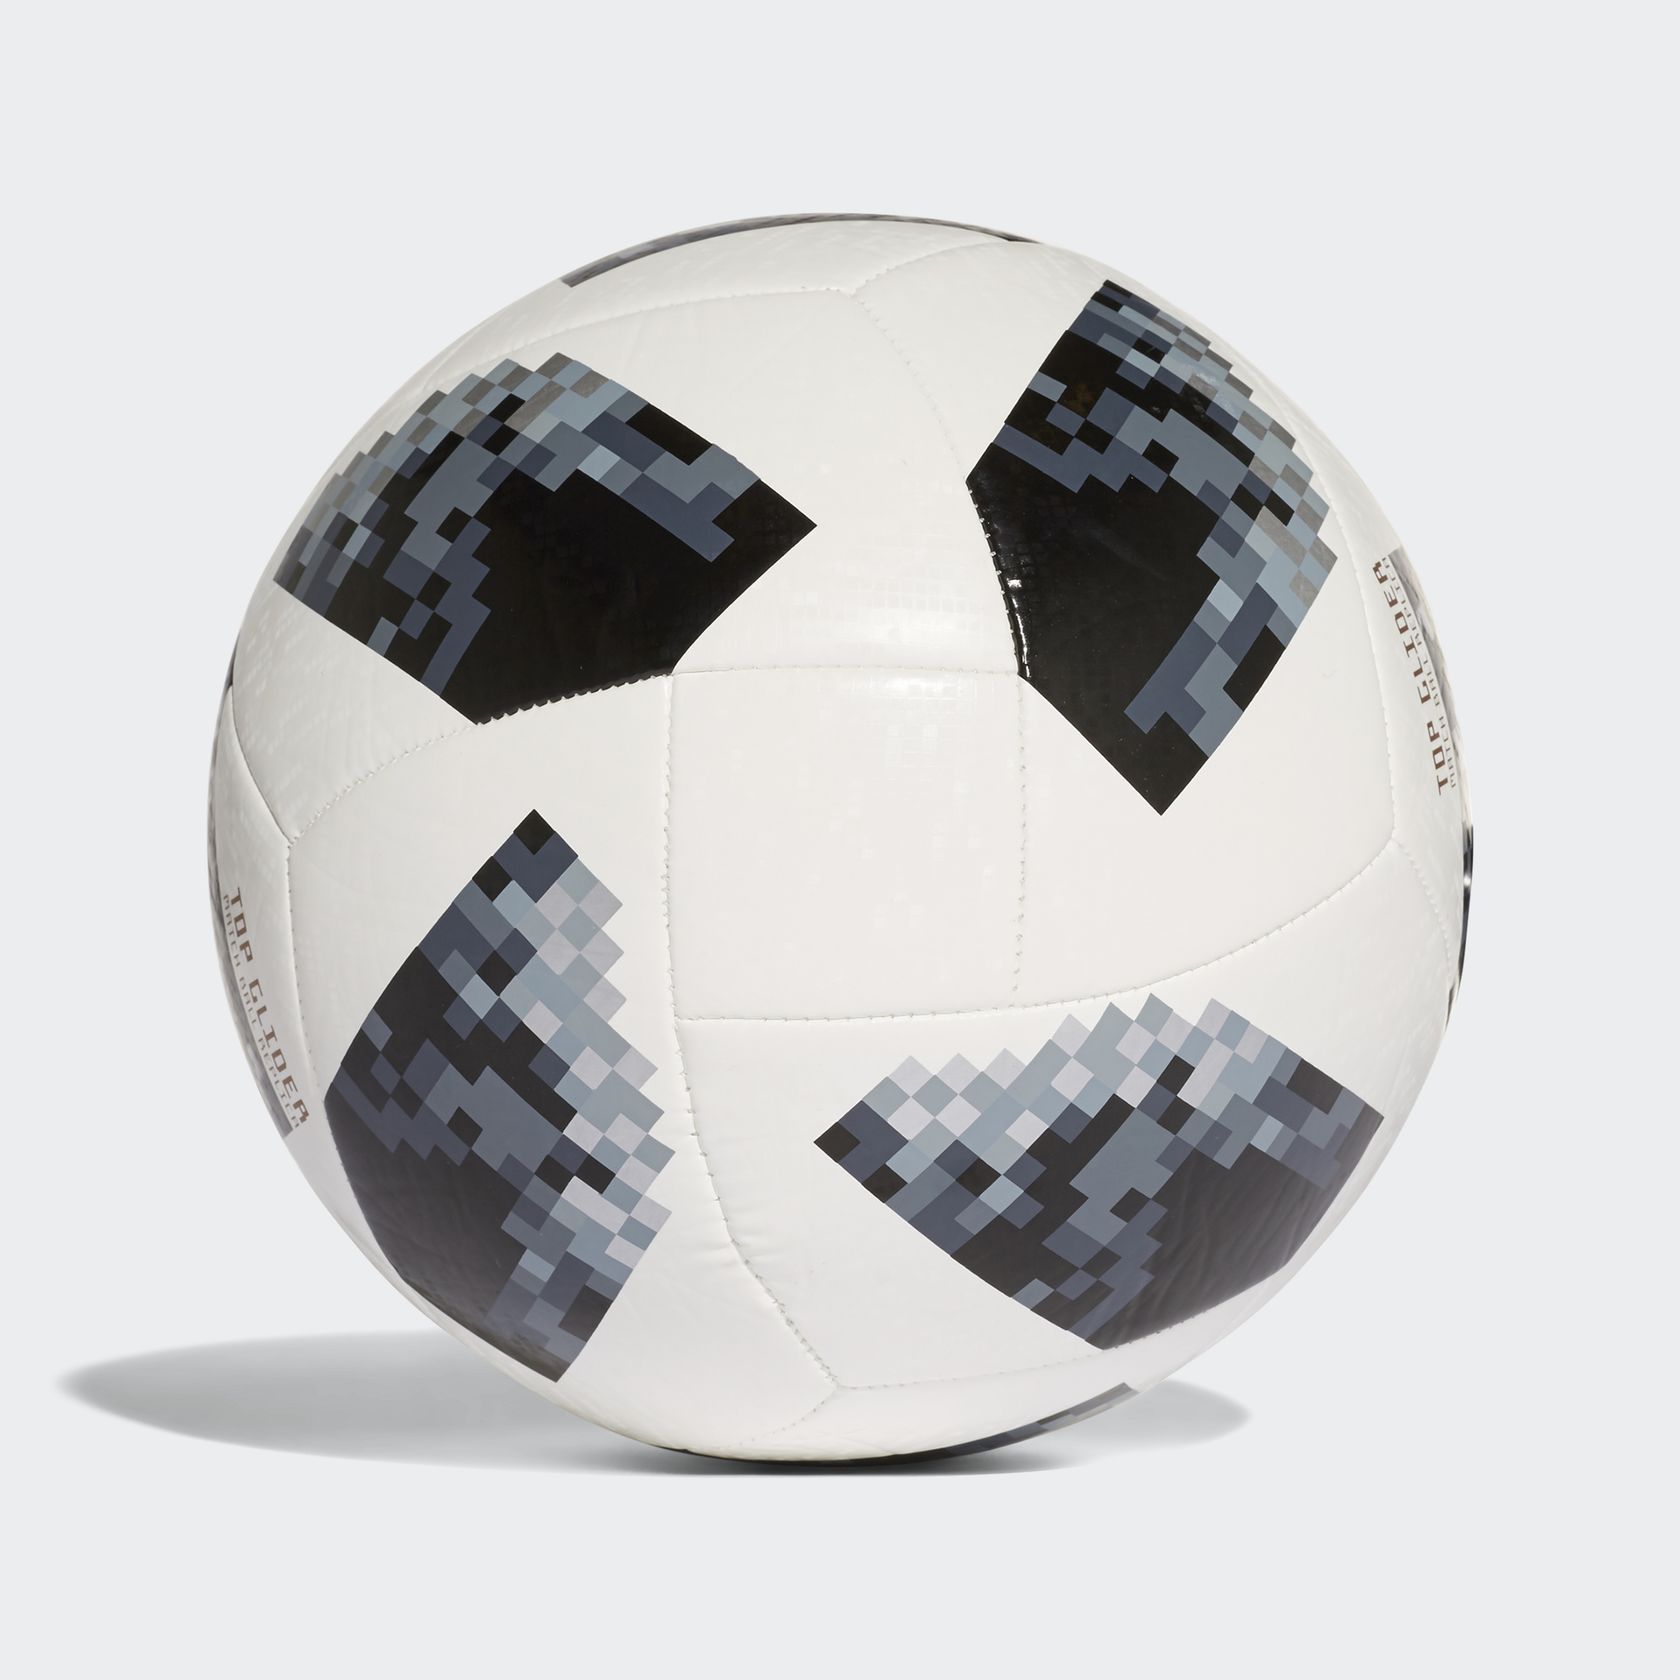 Fifa World Cup 2018 Soccer Ball